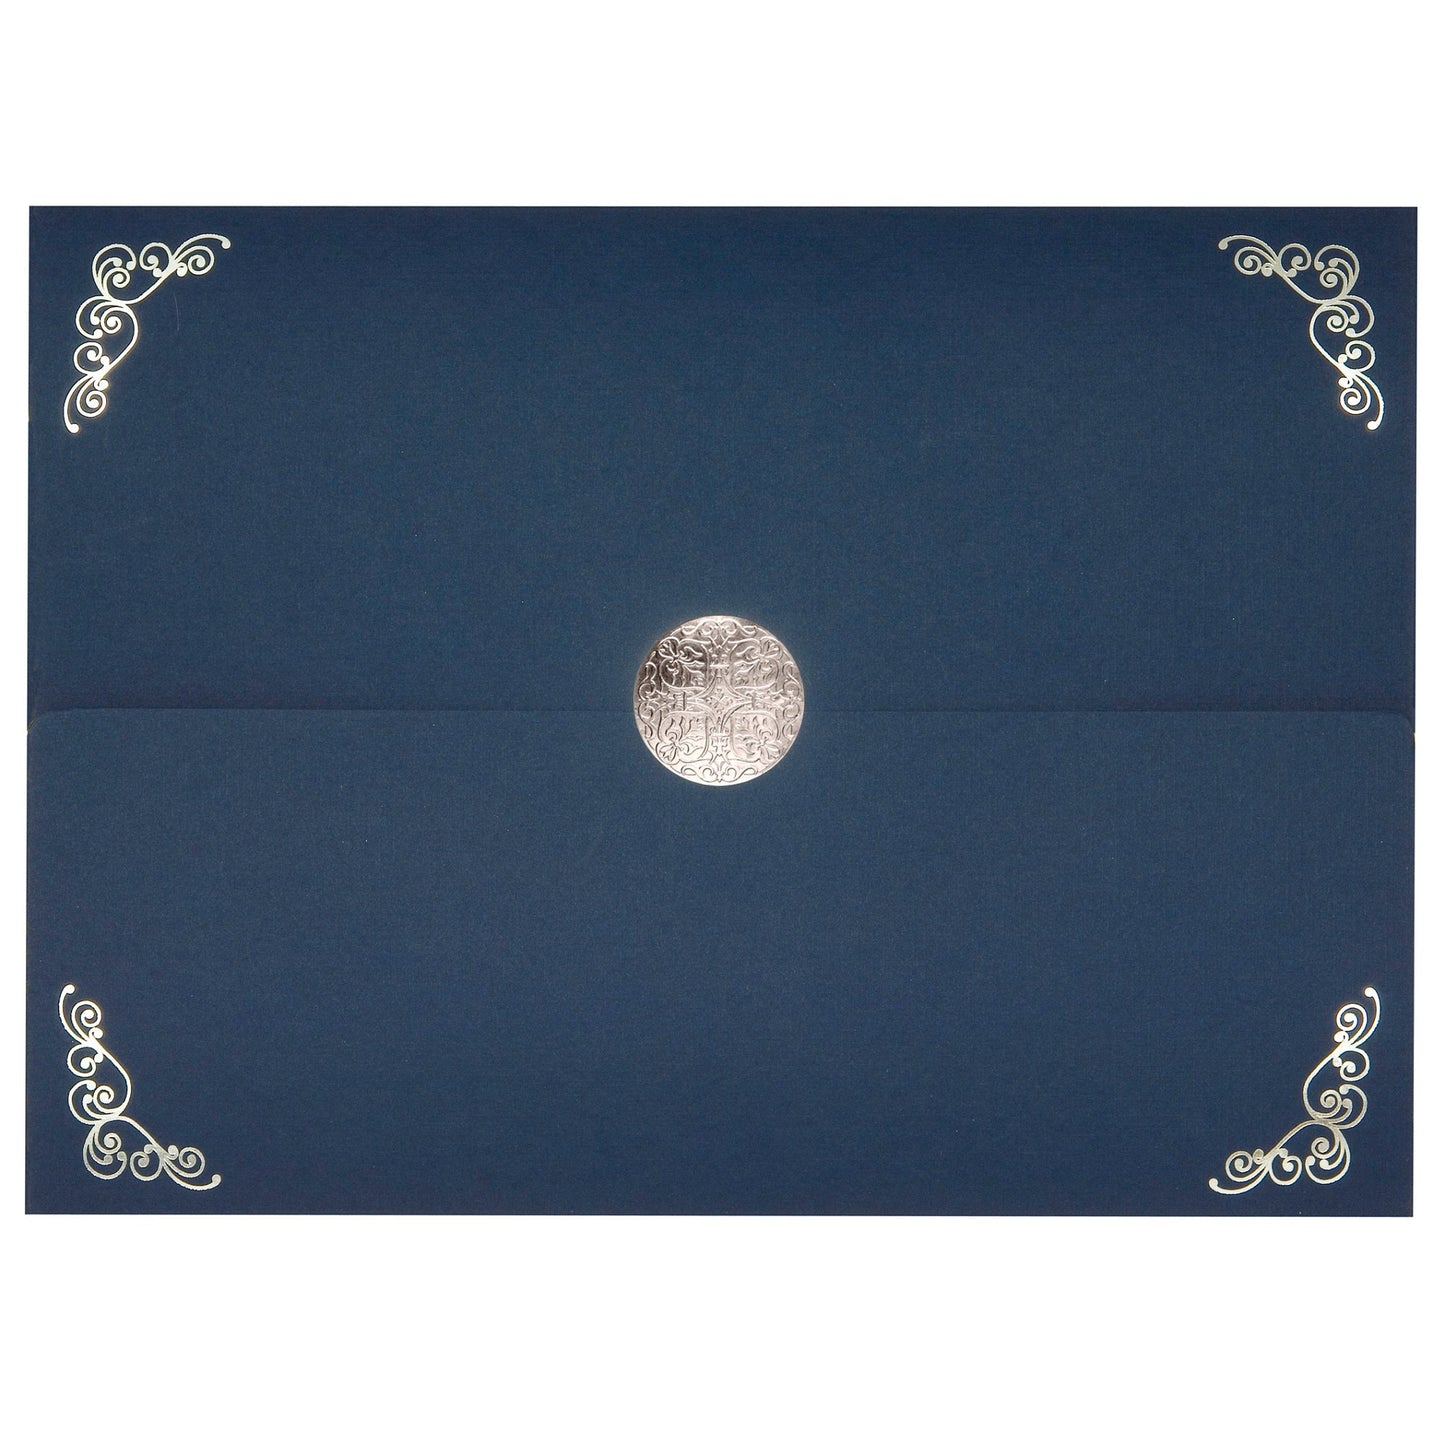 St. James® Elite™ Medallion Fold Certificate Holders, Linen, Navy Blue with Silver Medallion, Pack of 5